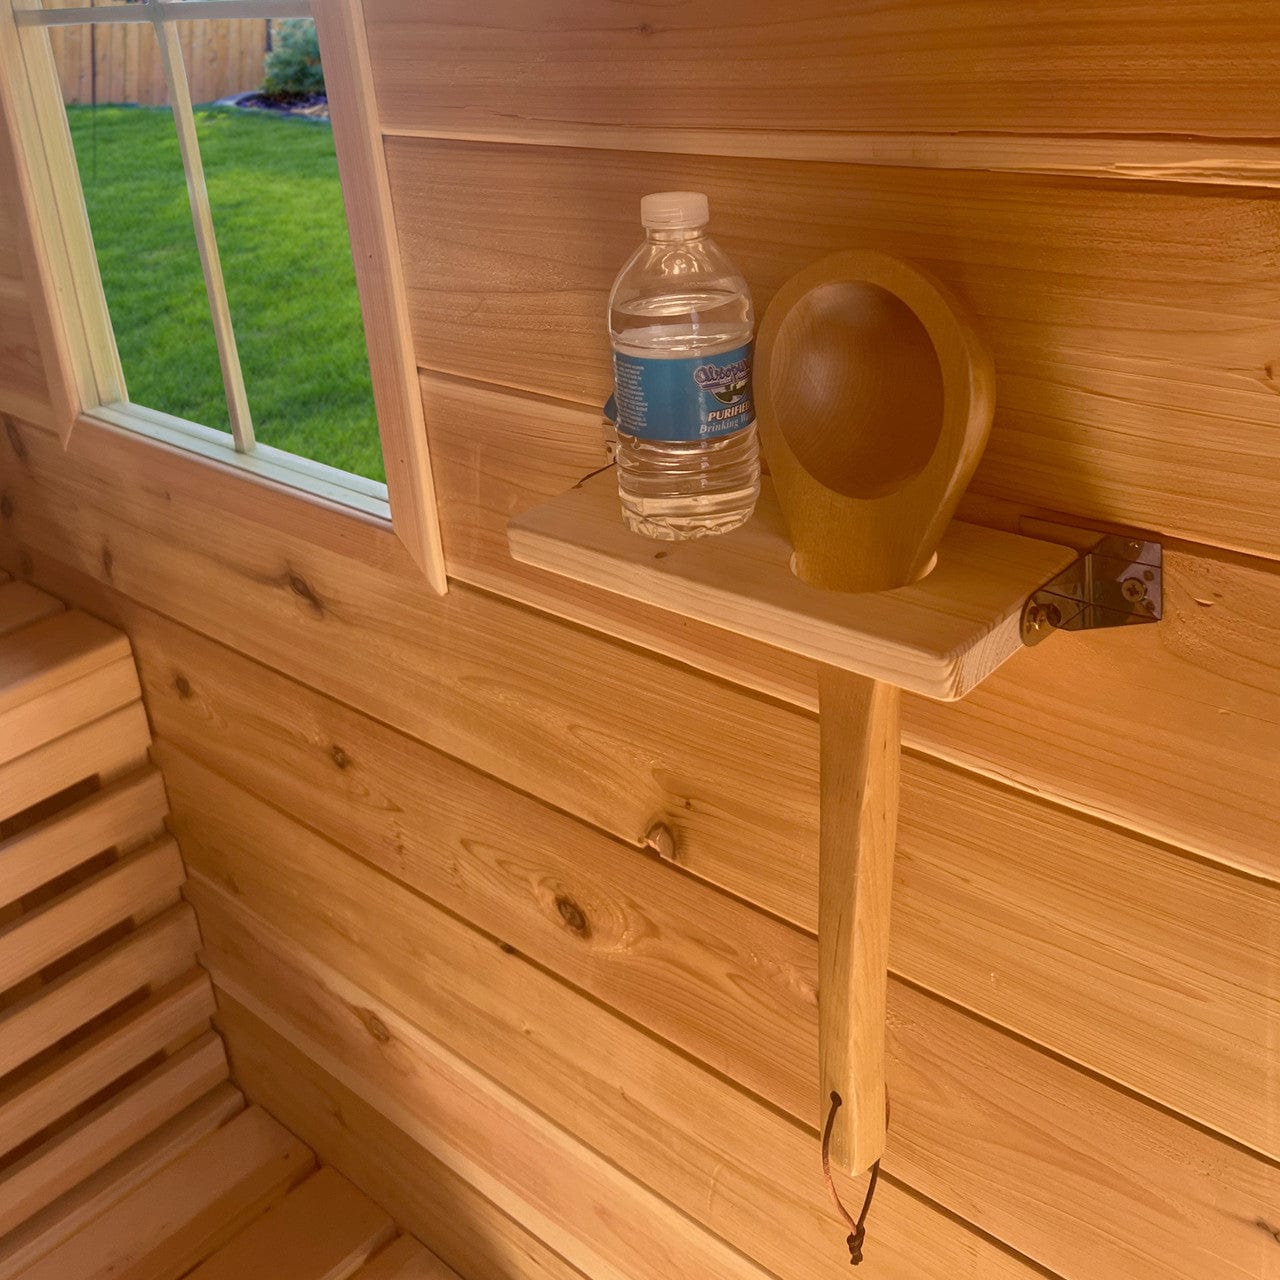 Aleko SACHOLDWT-AP Multi-purpose Sauna Shelf - Birch Broom Holder - White Pine Wood